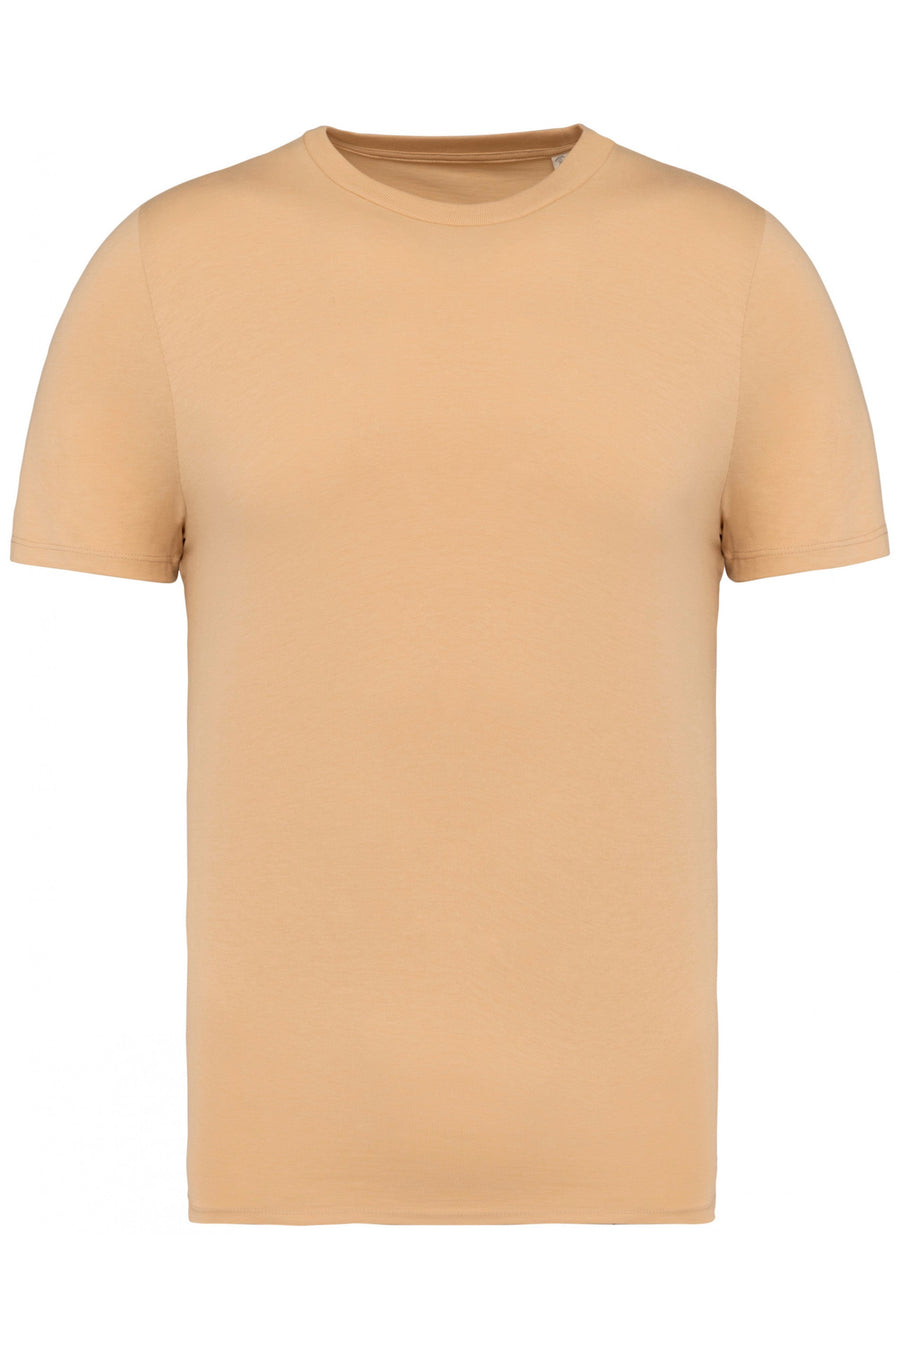 T-shirt col rond 170g Unisexe [NS304]